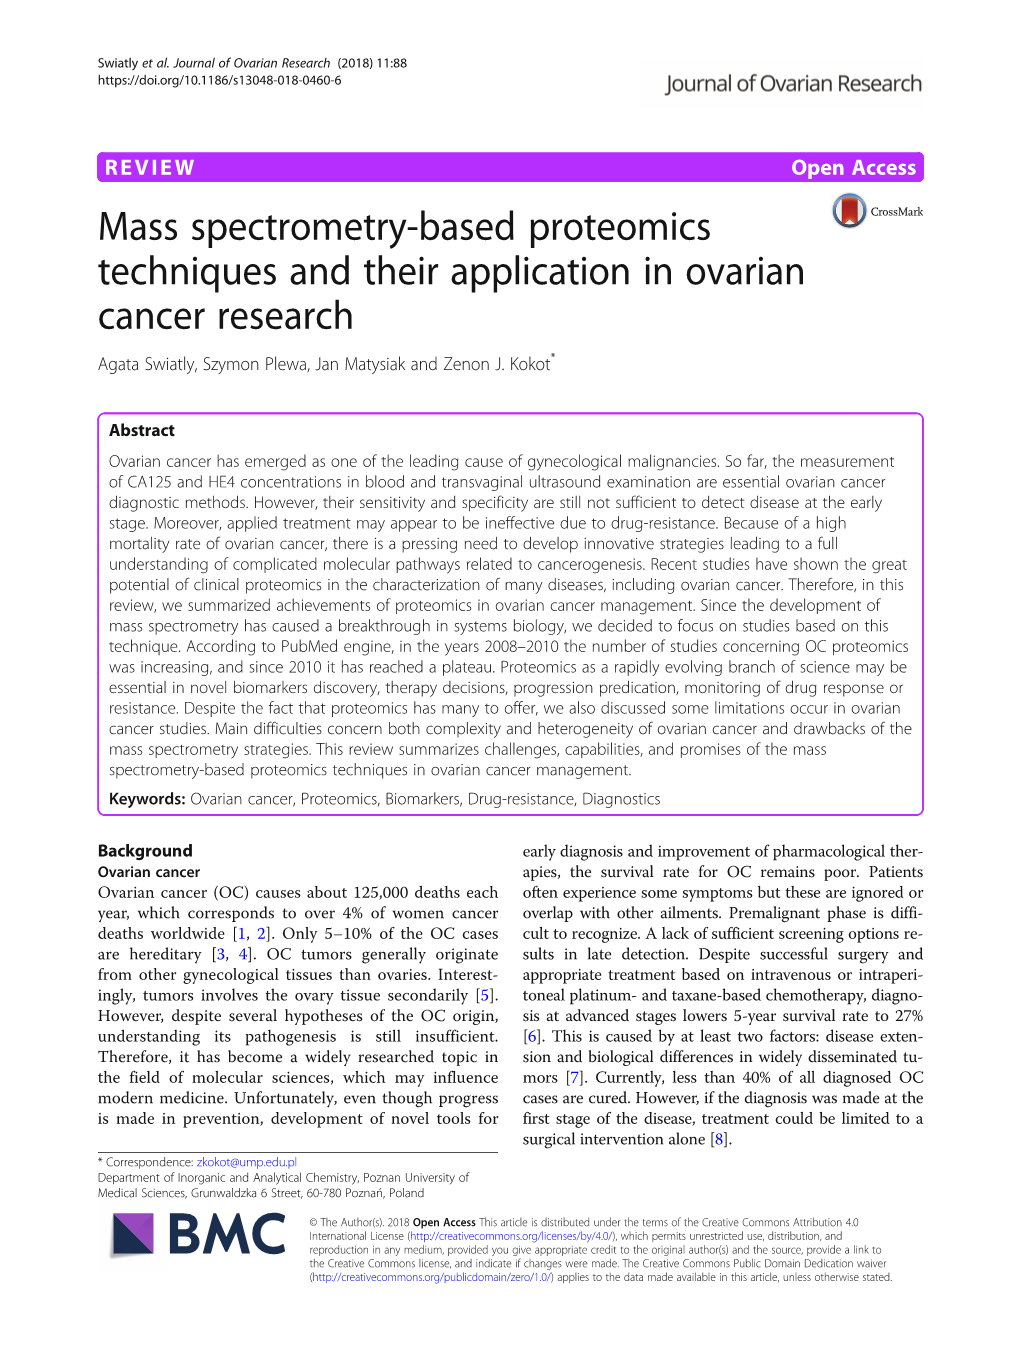 Mass Spectrometry-Based Proteomics Techniques and Their Application in Ovarian Cancer Research Agata Swiatly, Szymon Plewa, Jan Matysiak and Zenon J